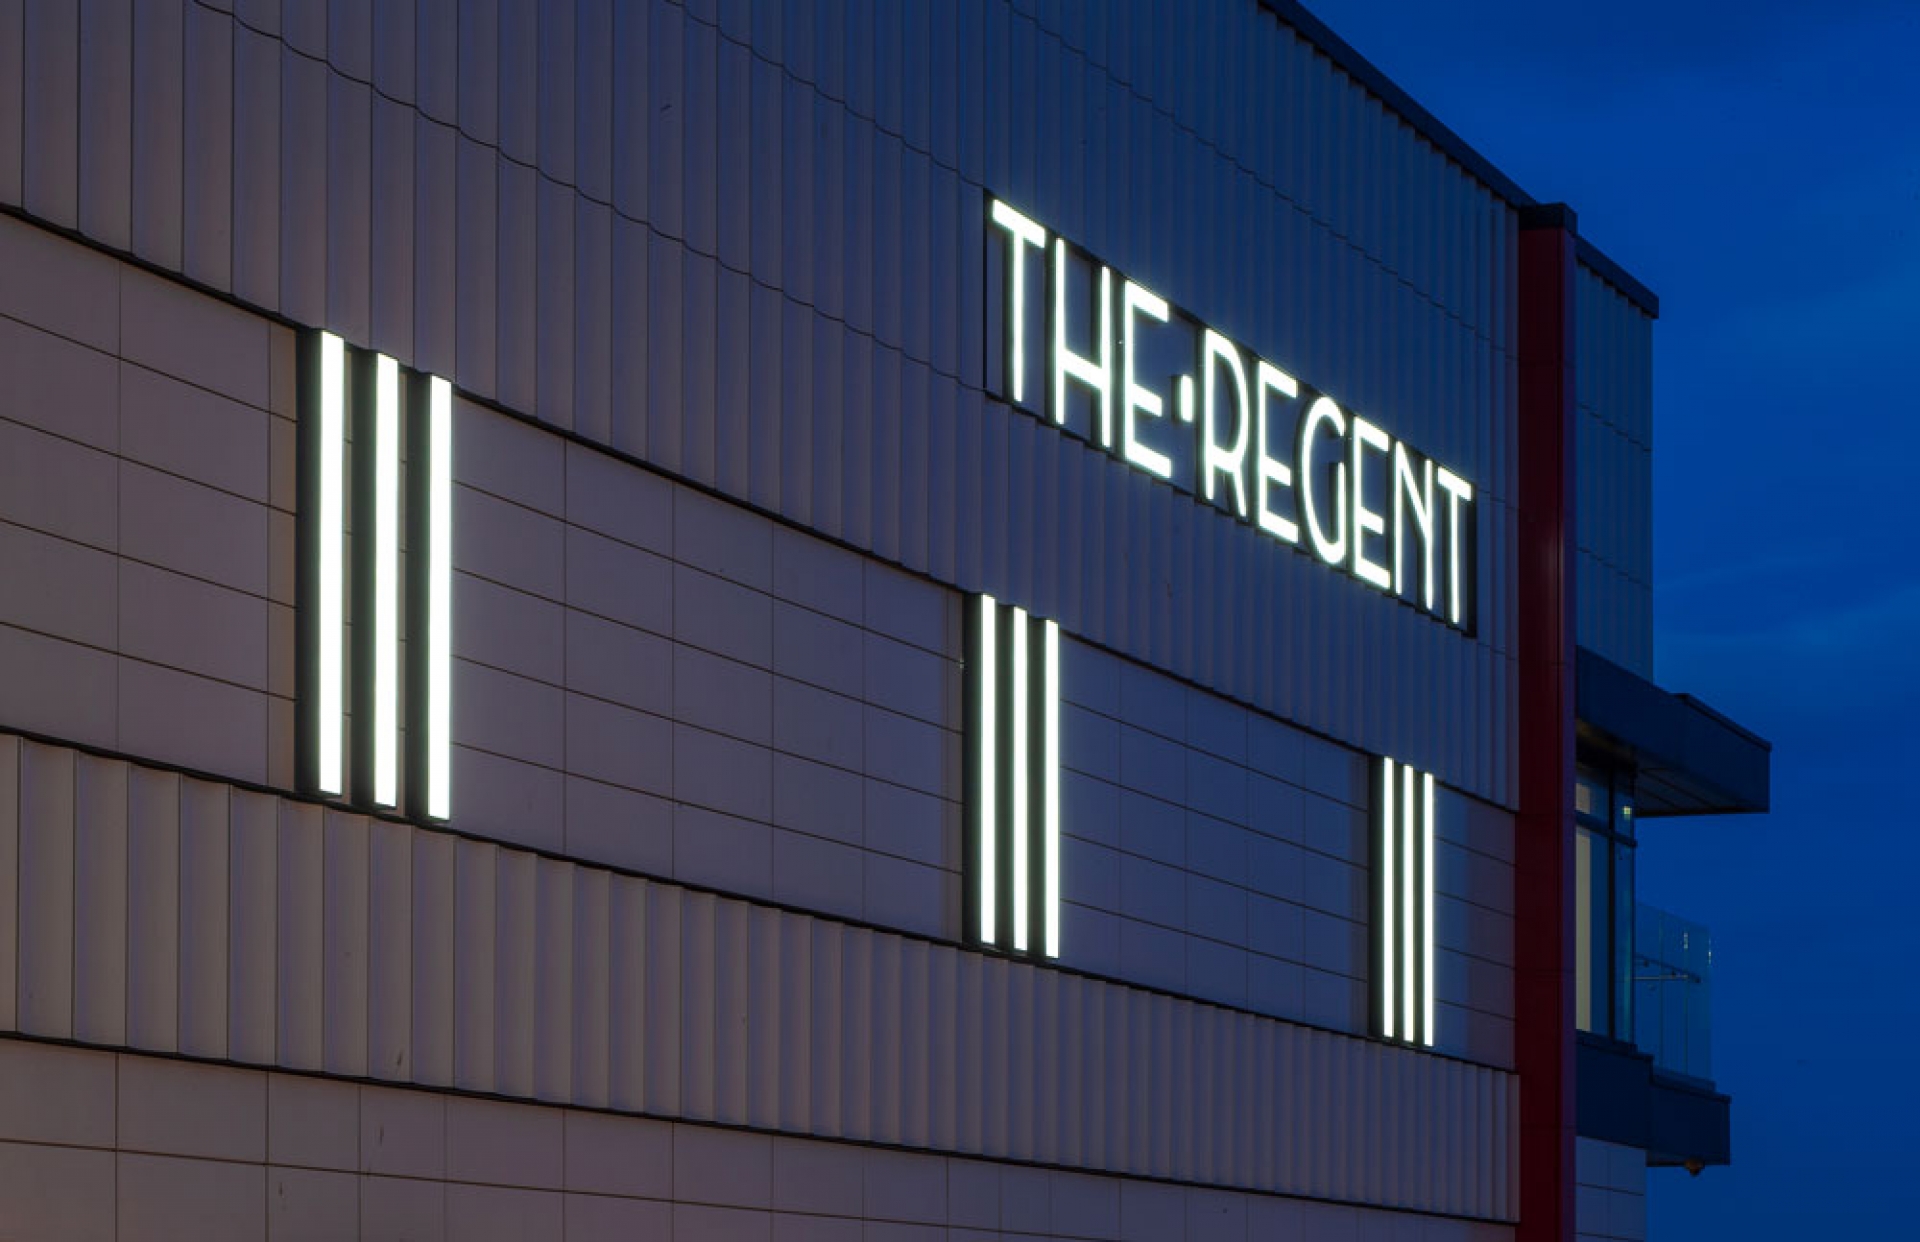 The Regent Cinema 